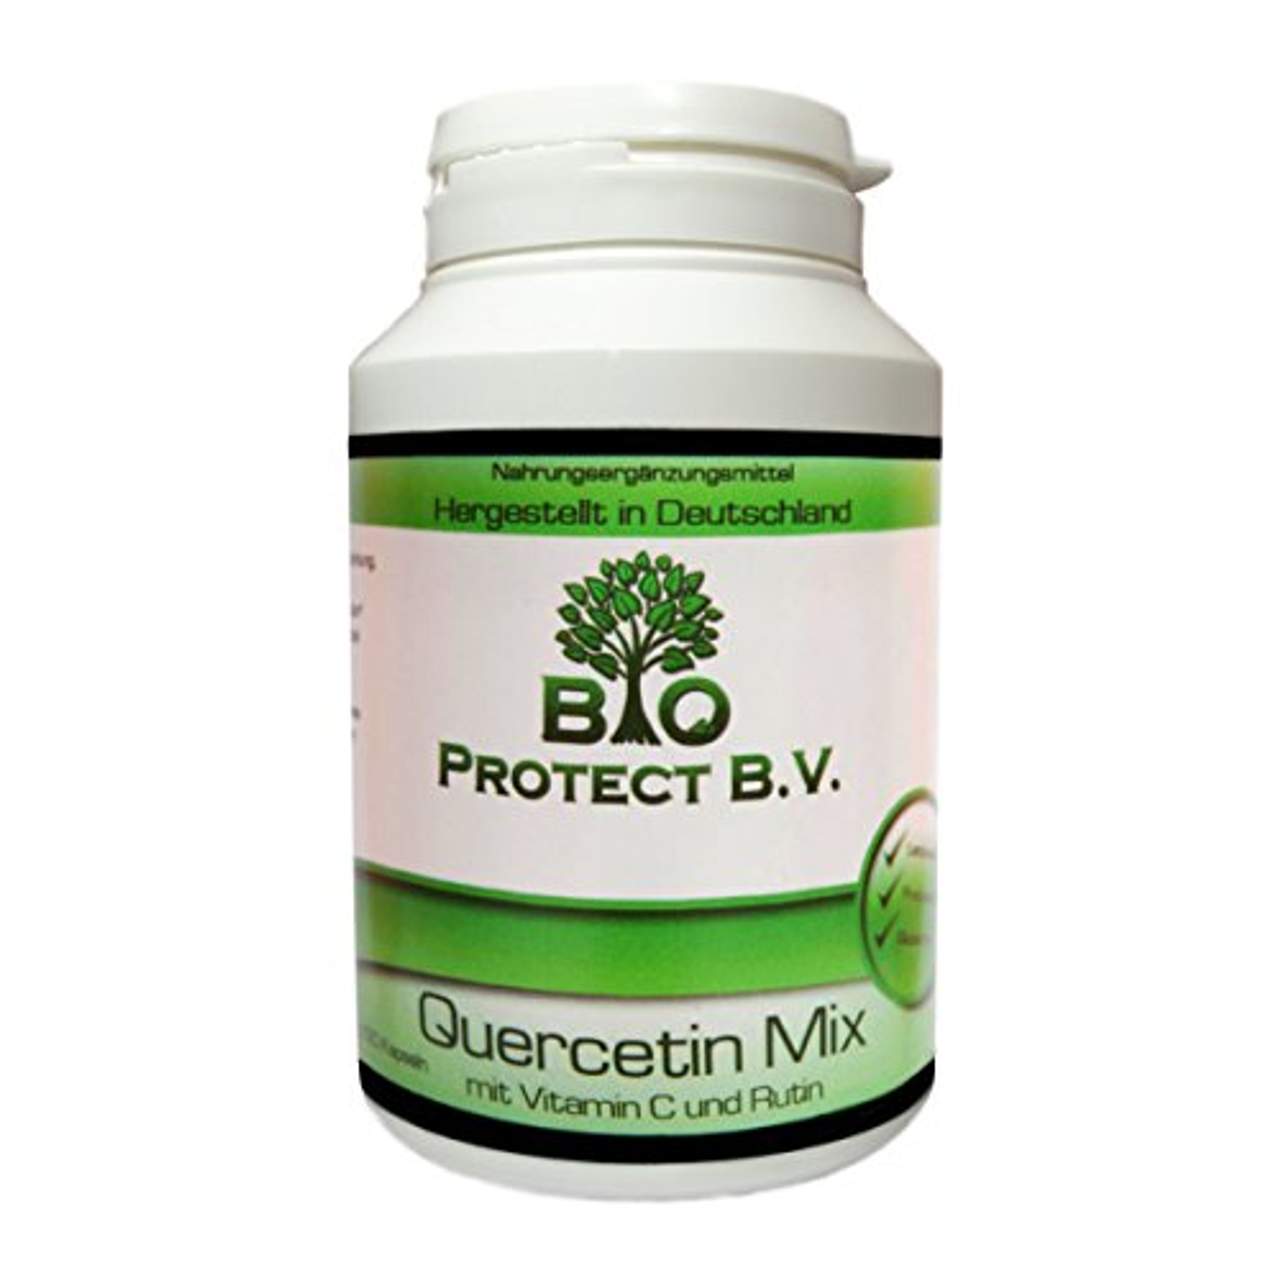 Quercetin Mix 120 Kapseln -eine Kapsel enthält 300mg Vitamin